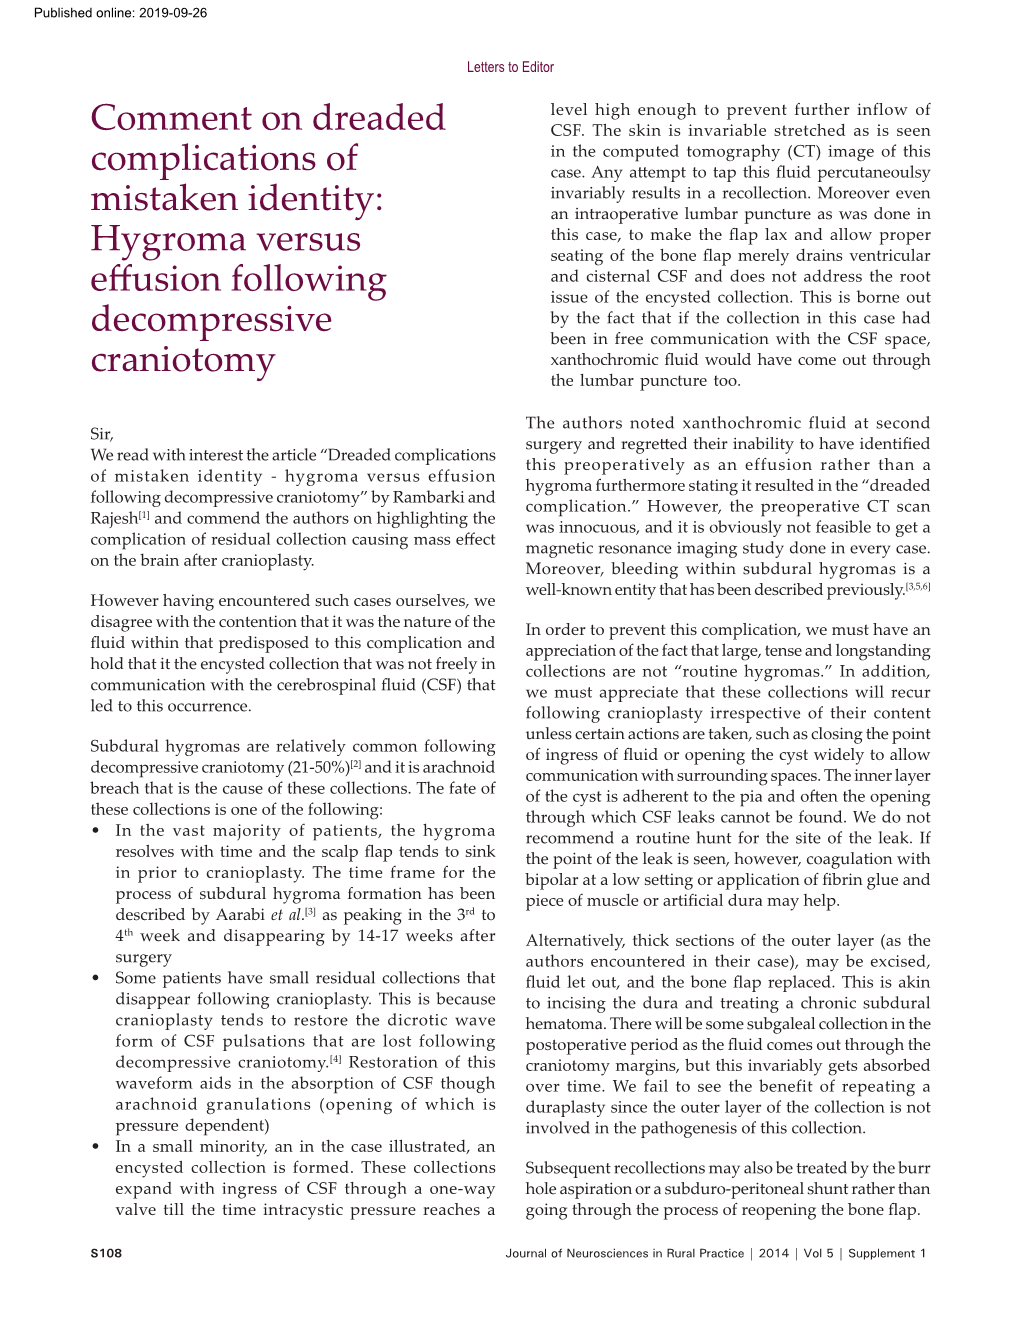 Hygroma Versus Effusion Following Decompressive Craniotomy